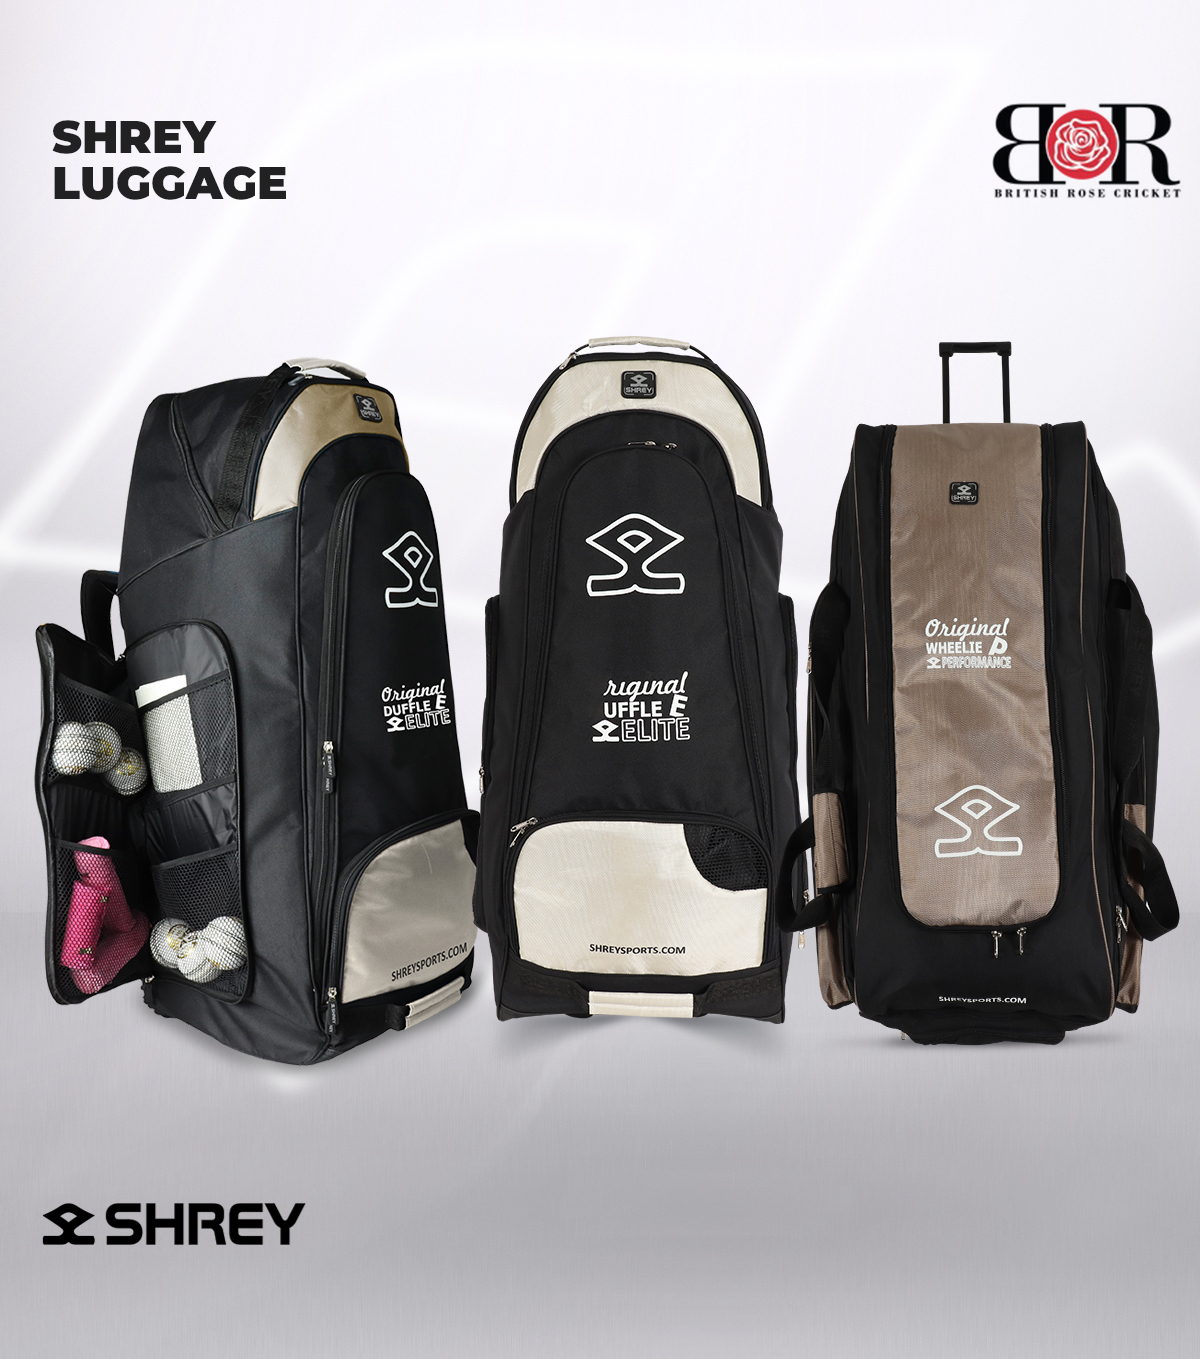 MRF VK 18 Duffle Wheelie Kit Bag – Sturdy Sports